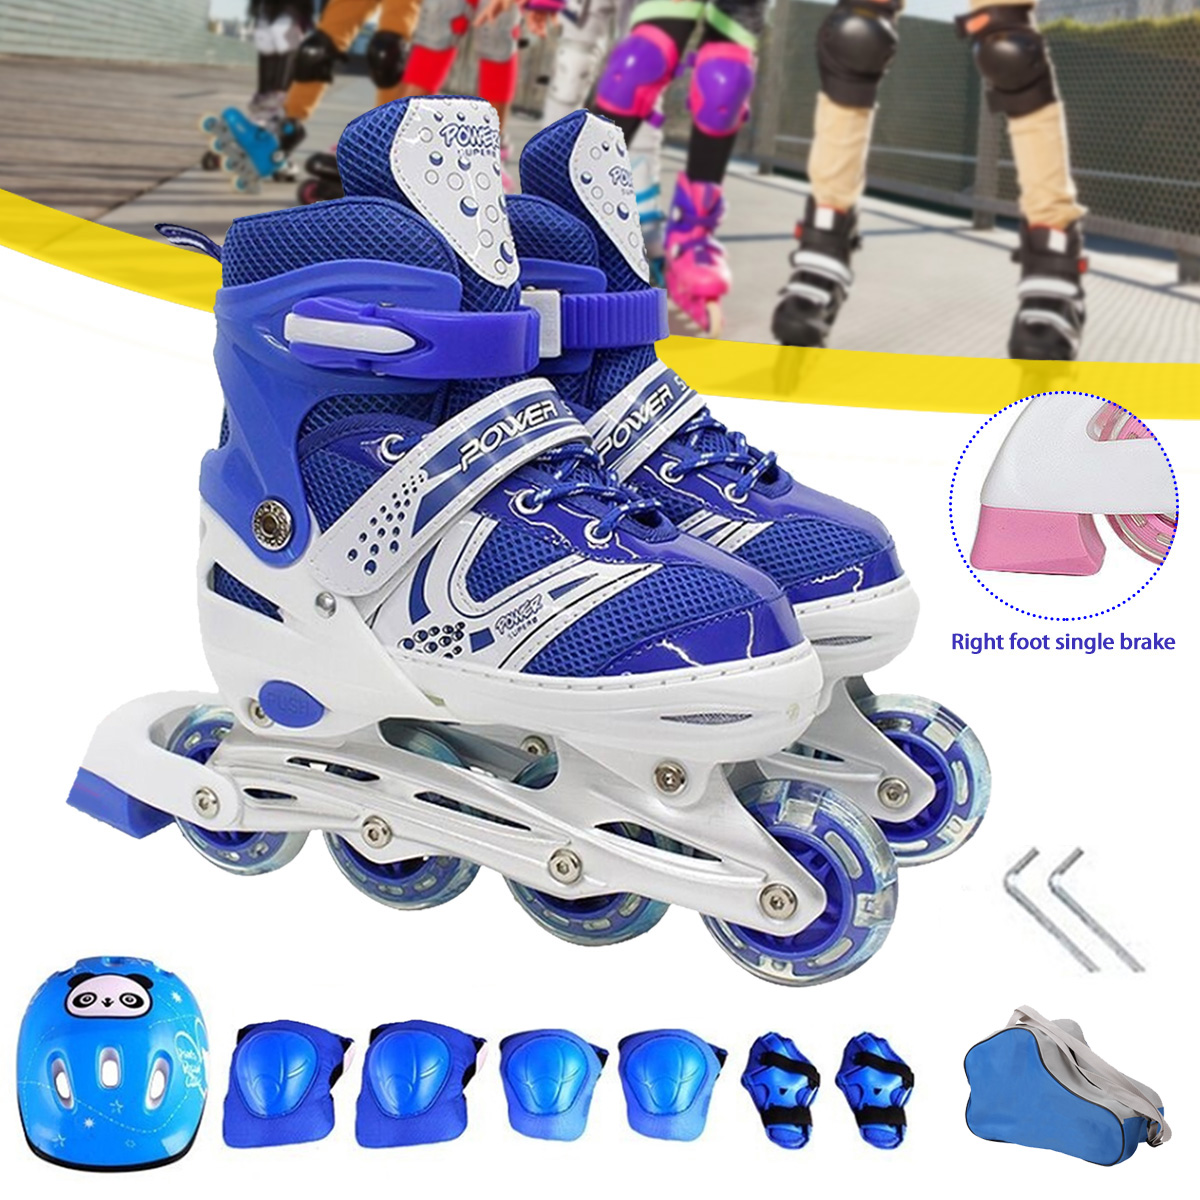 Childrens-Adjustable-Skates-Full-Set-Single-Flash-Ice-Skate-Shoes-for-Boys-and-Girls-Inline-Skates-f-1697070-1